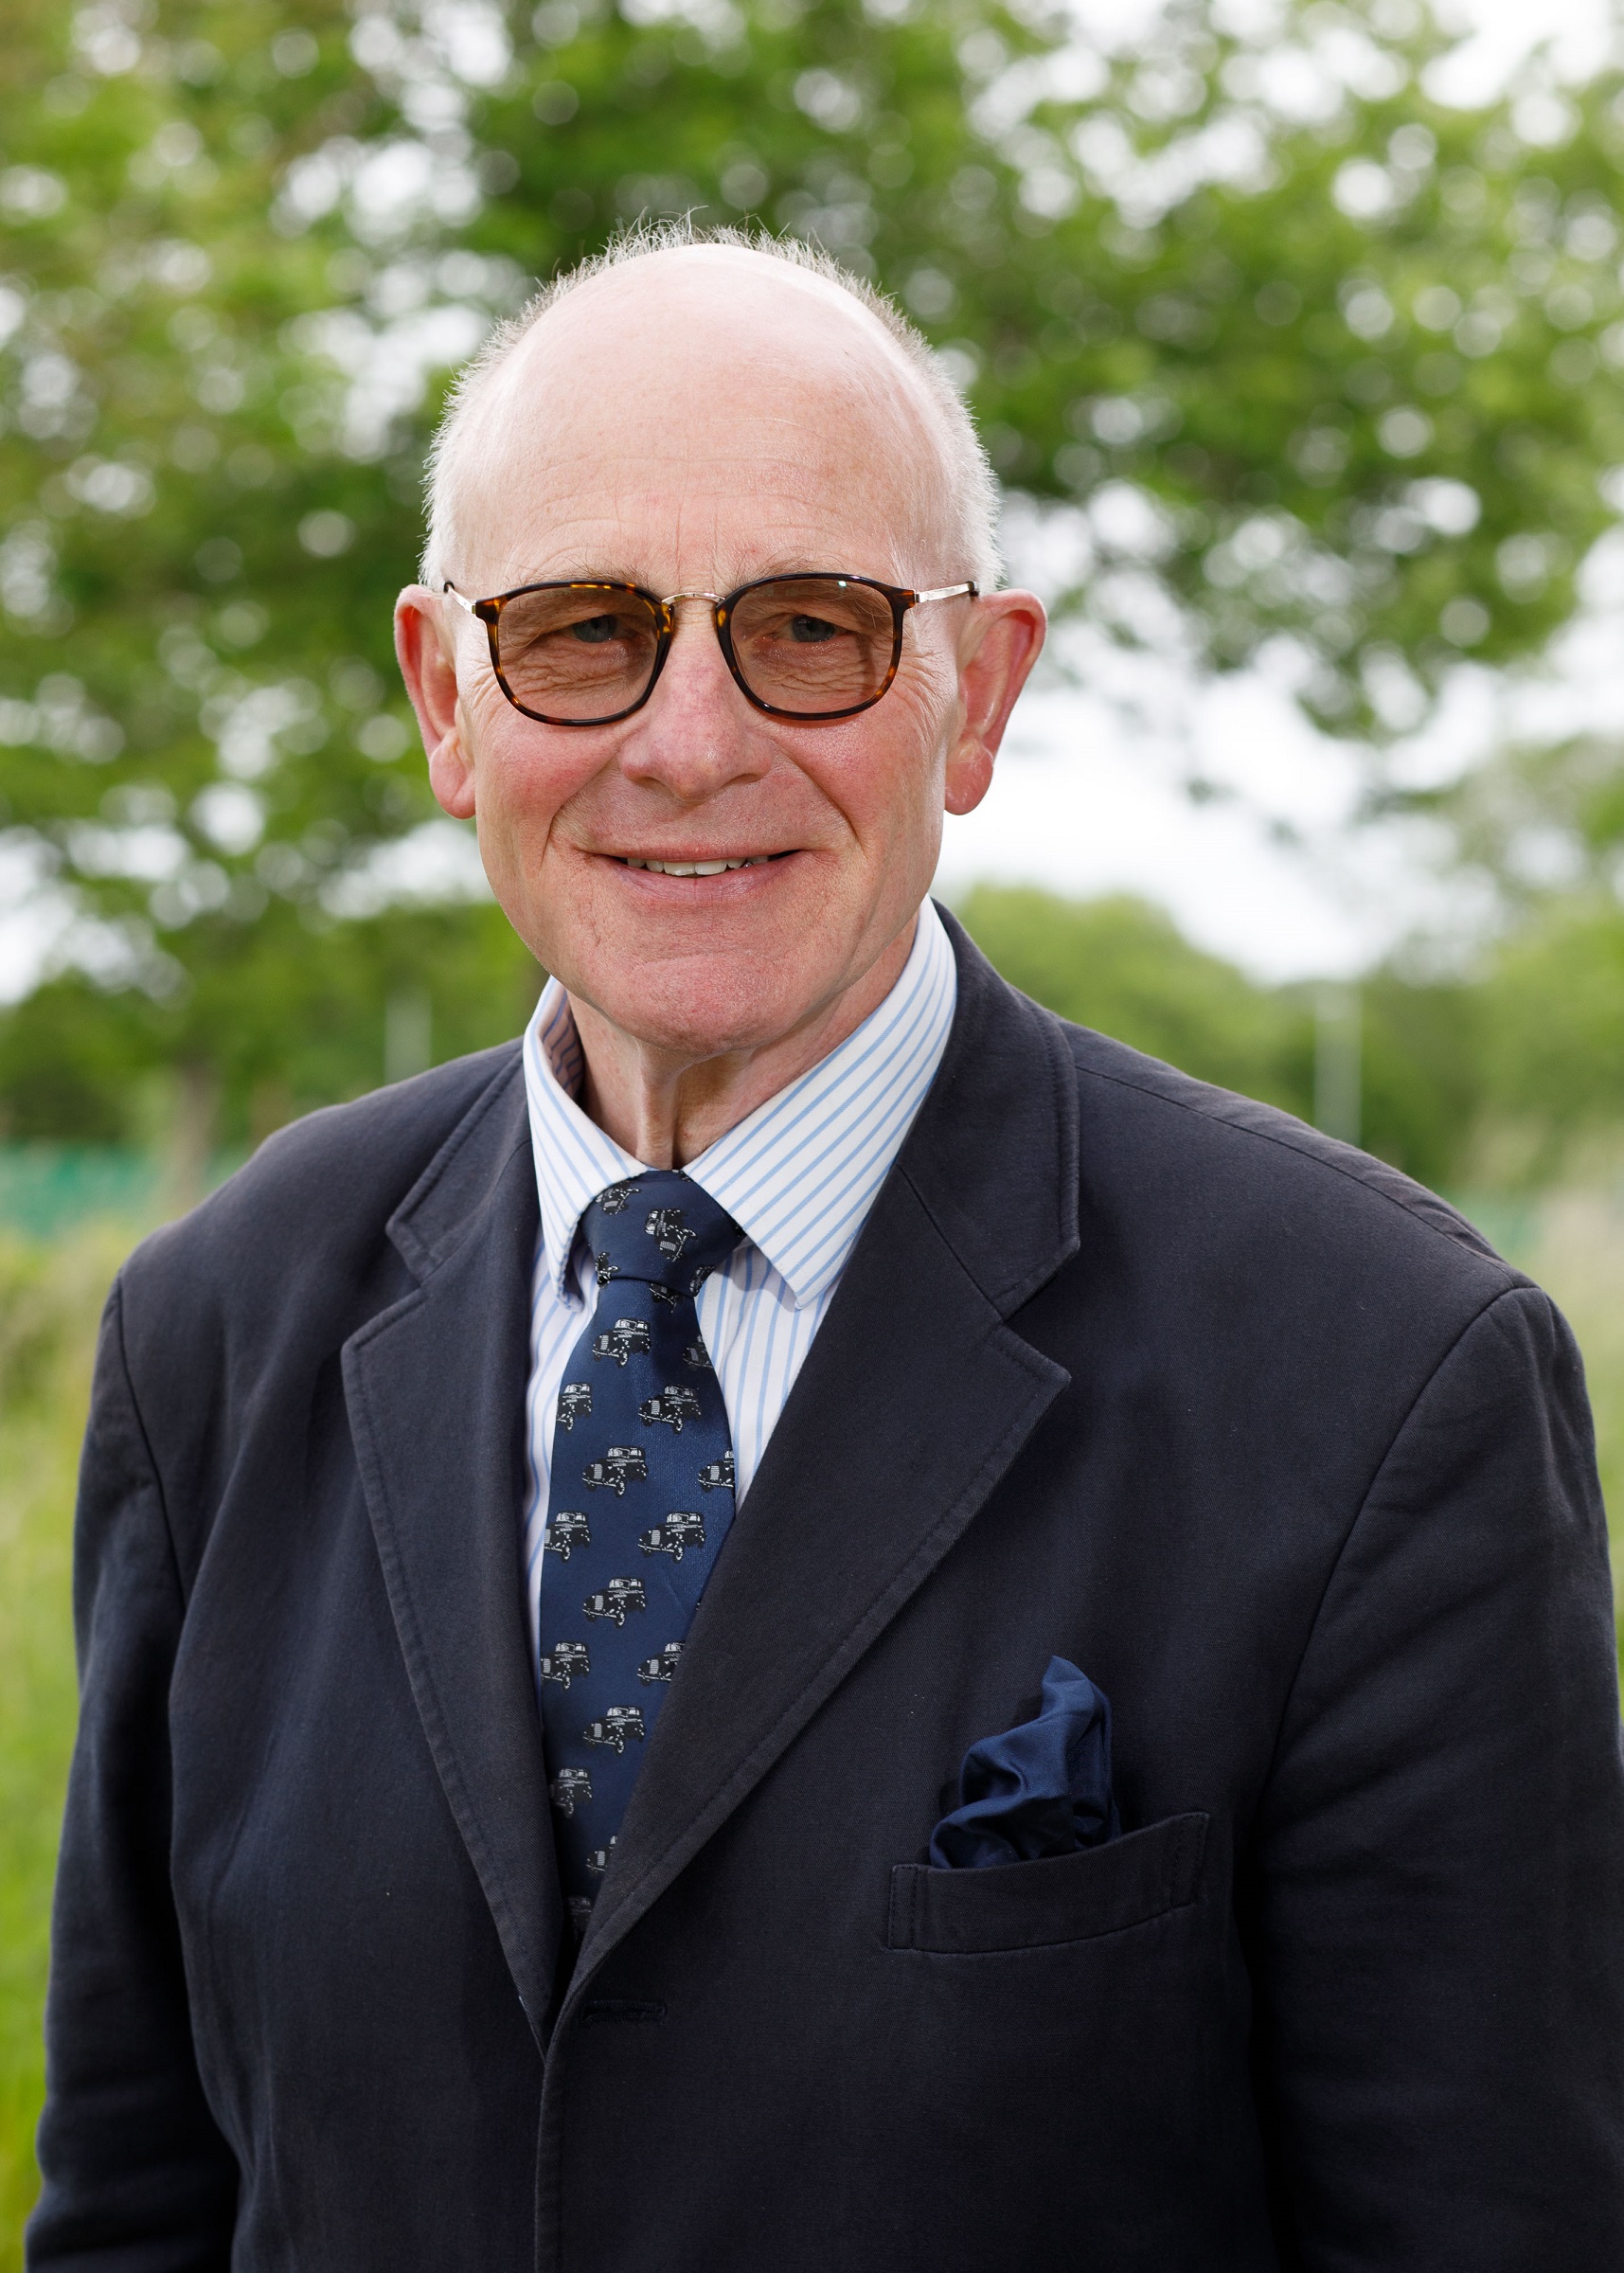 Hugh Crabtree, wearing glasses, a dark suit and tie